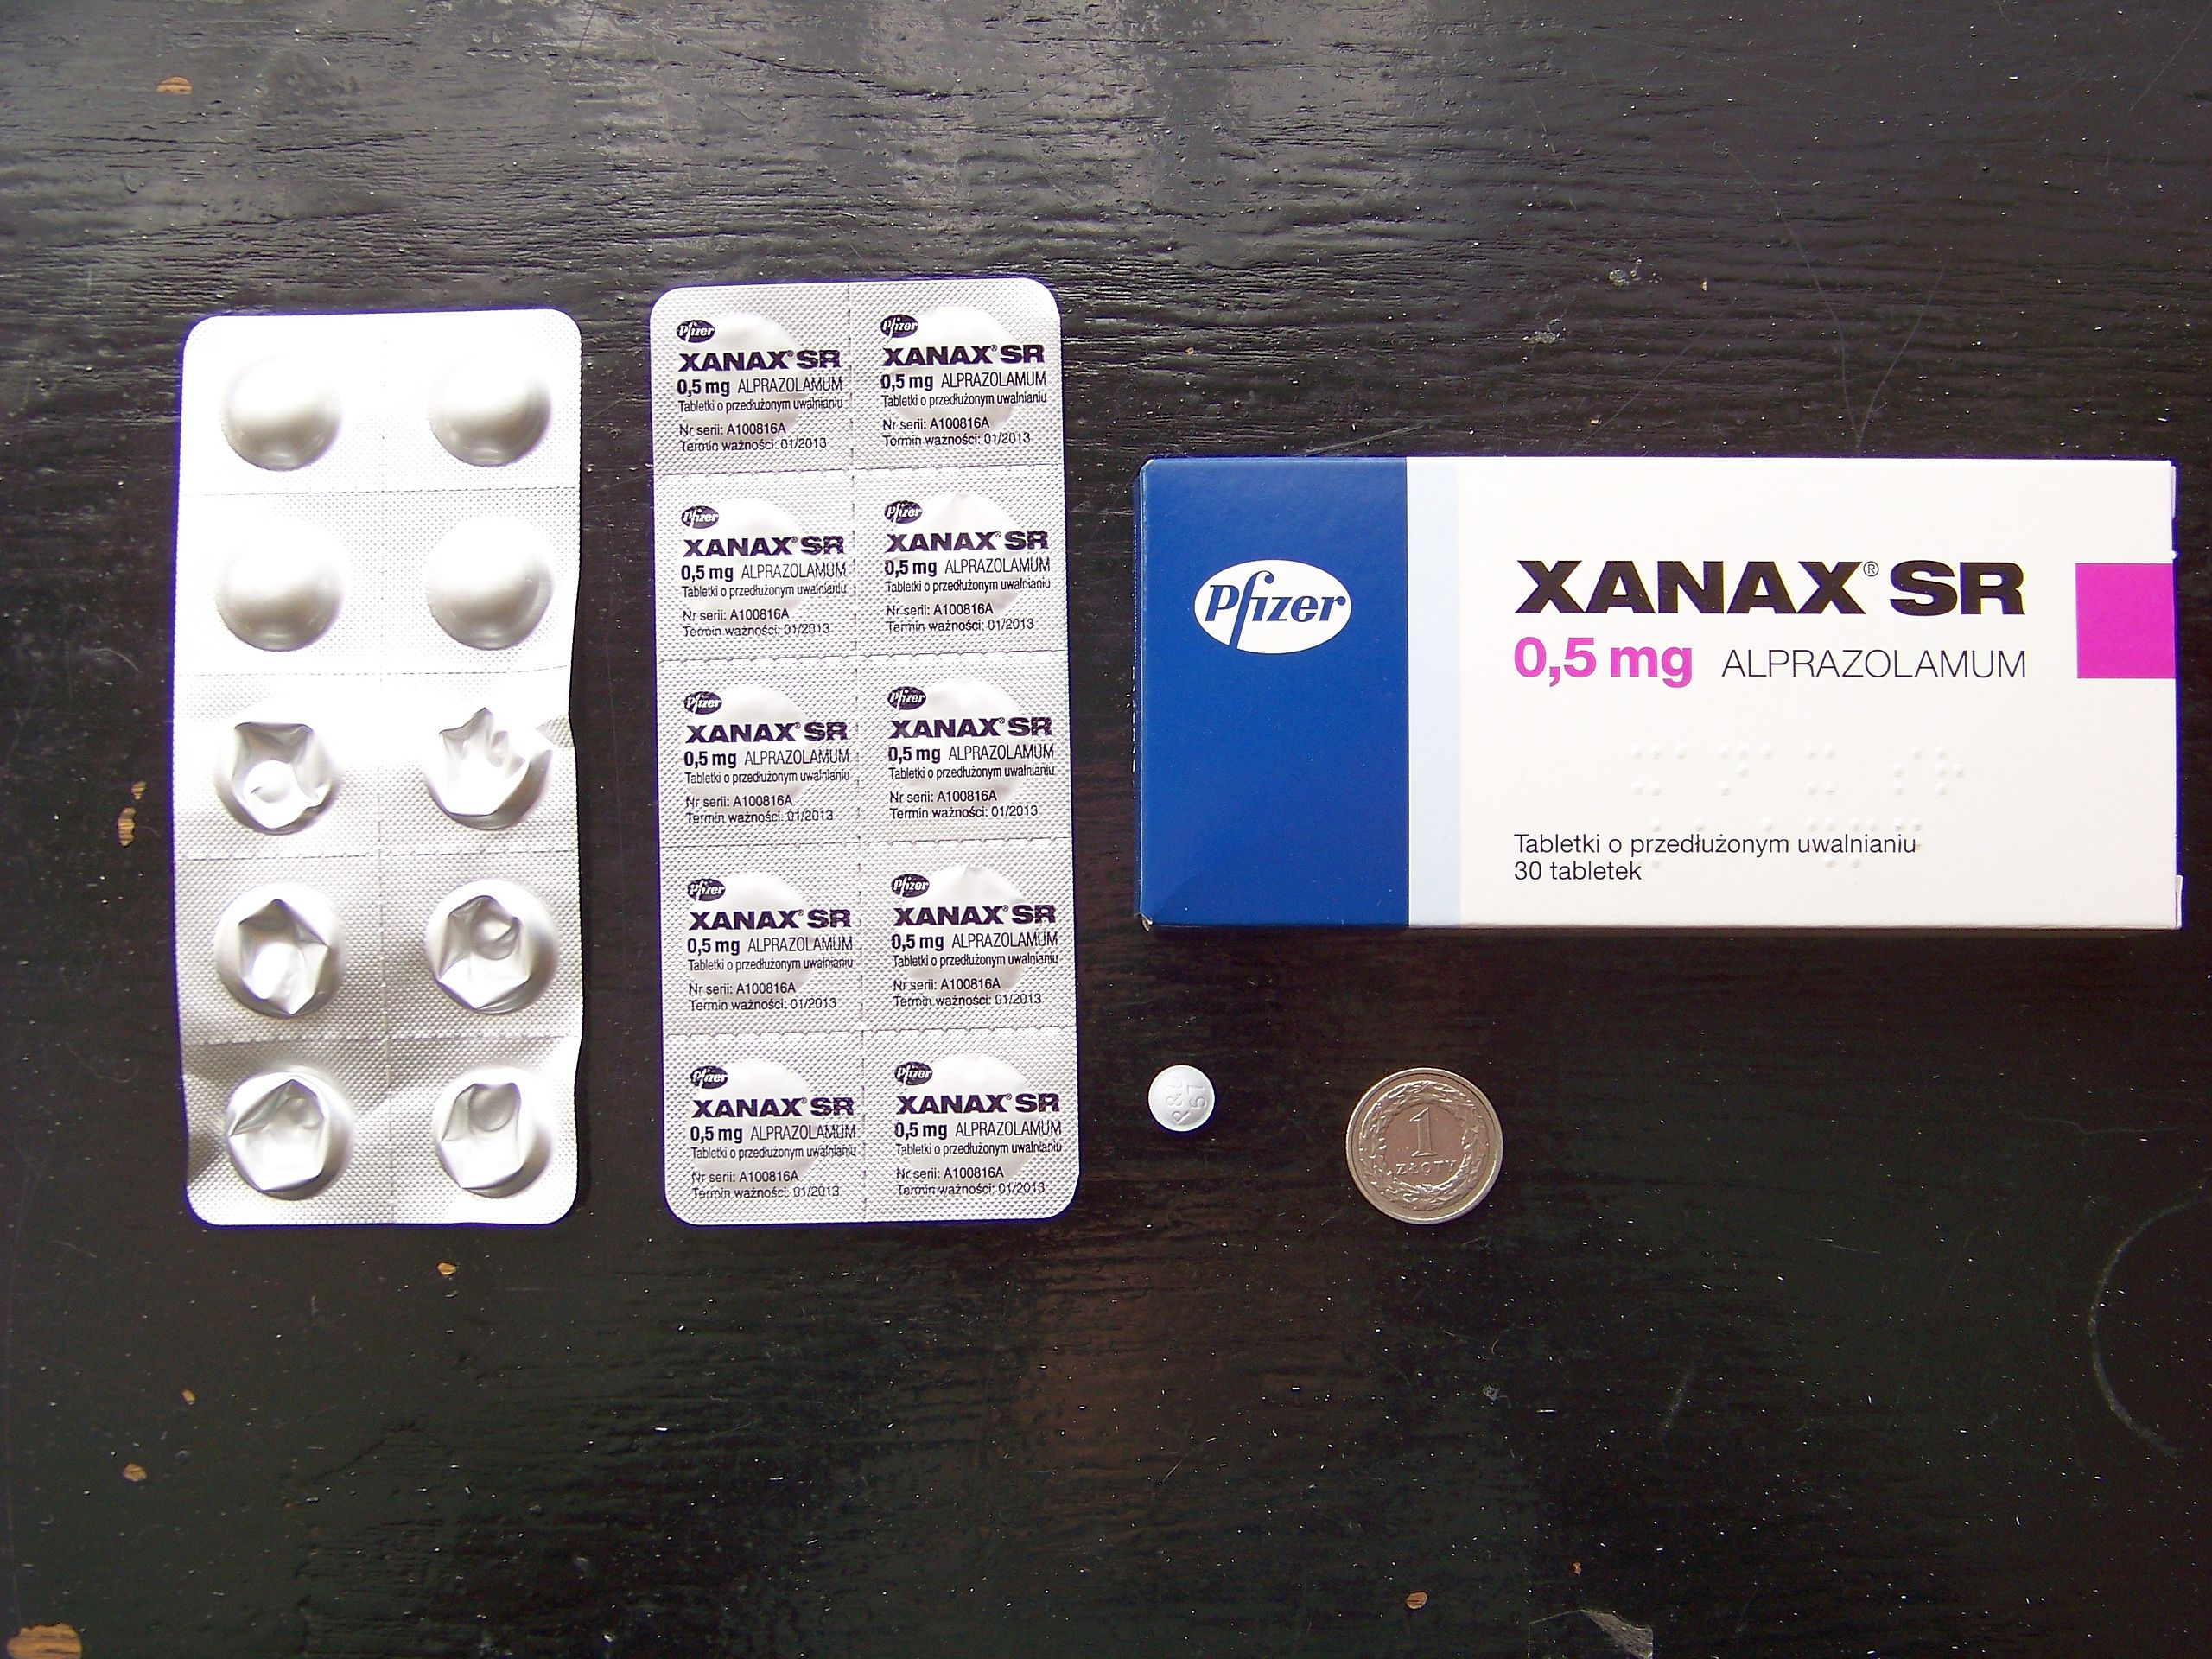 xanax drug test for new job